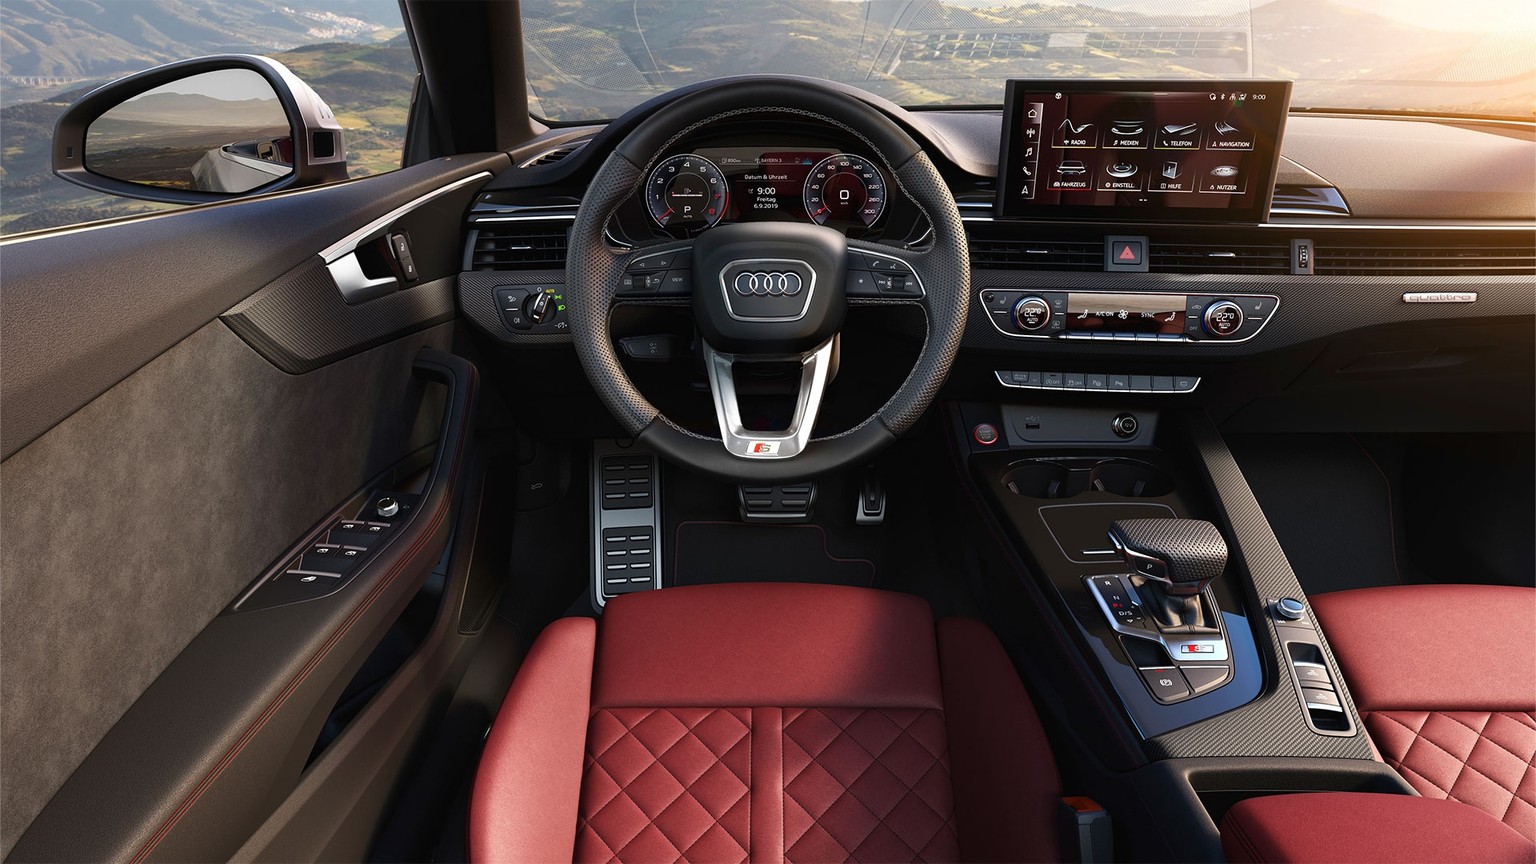 Audi S5 Cabriolet MMI touch display - Audi Australia